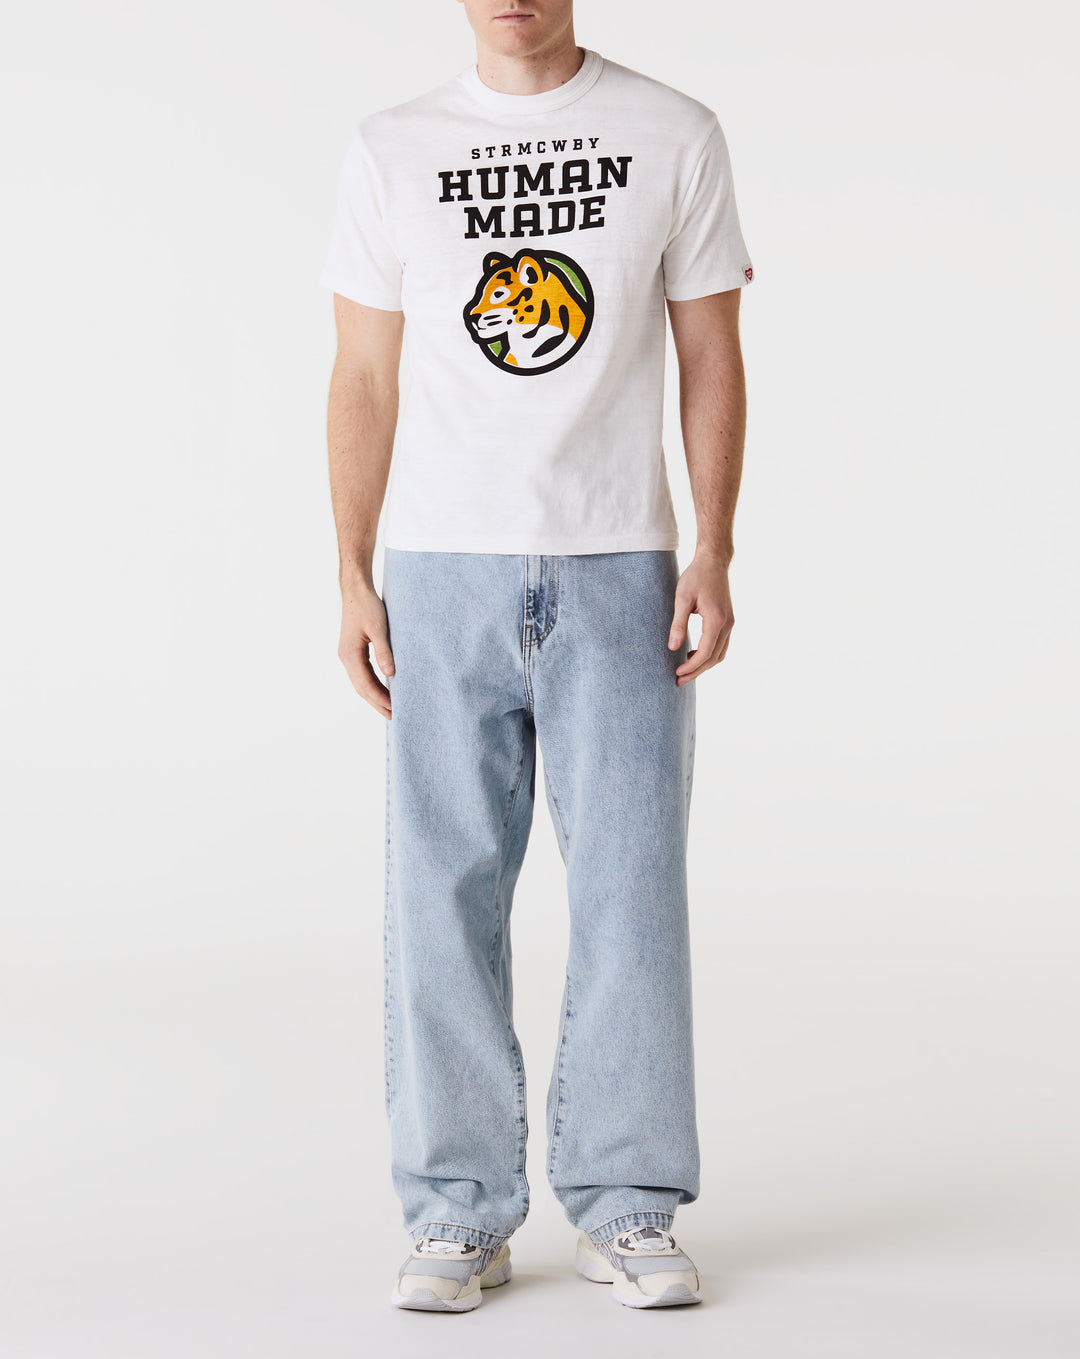 Human Made Graphic T-Shirt #8  - XHIBITION